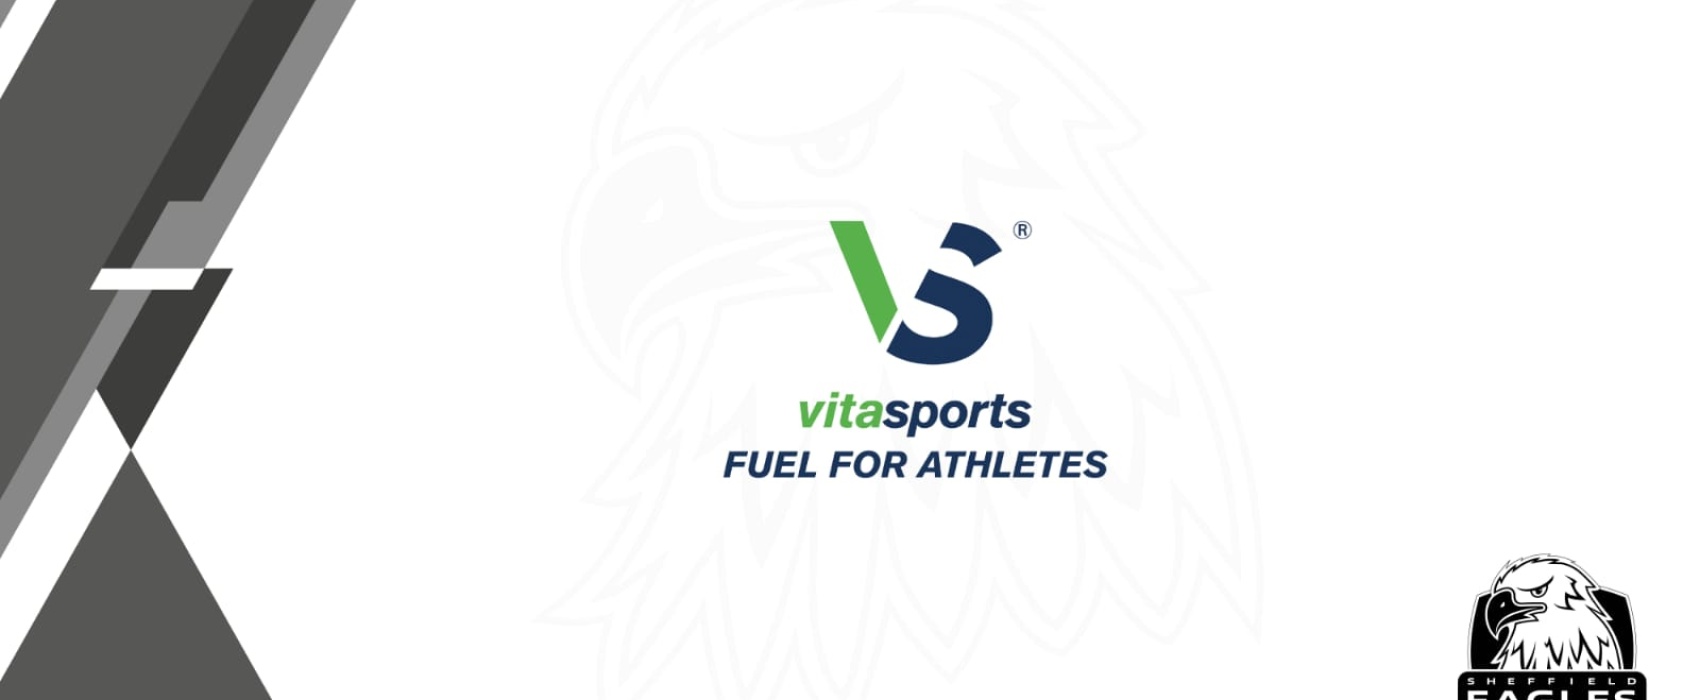 Eagles announce VitaSports as Nutrition Partner